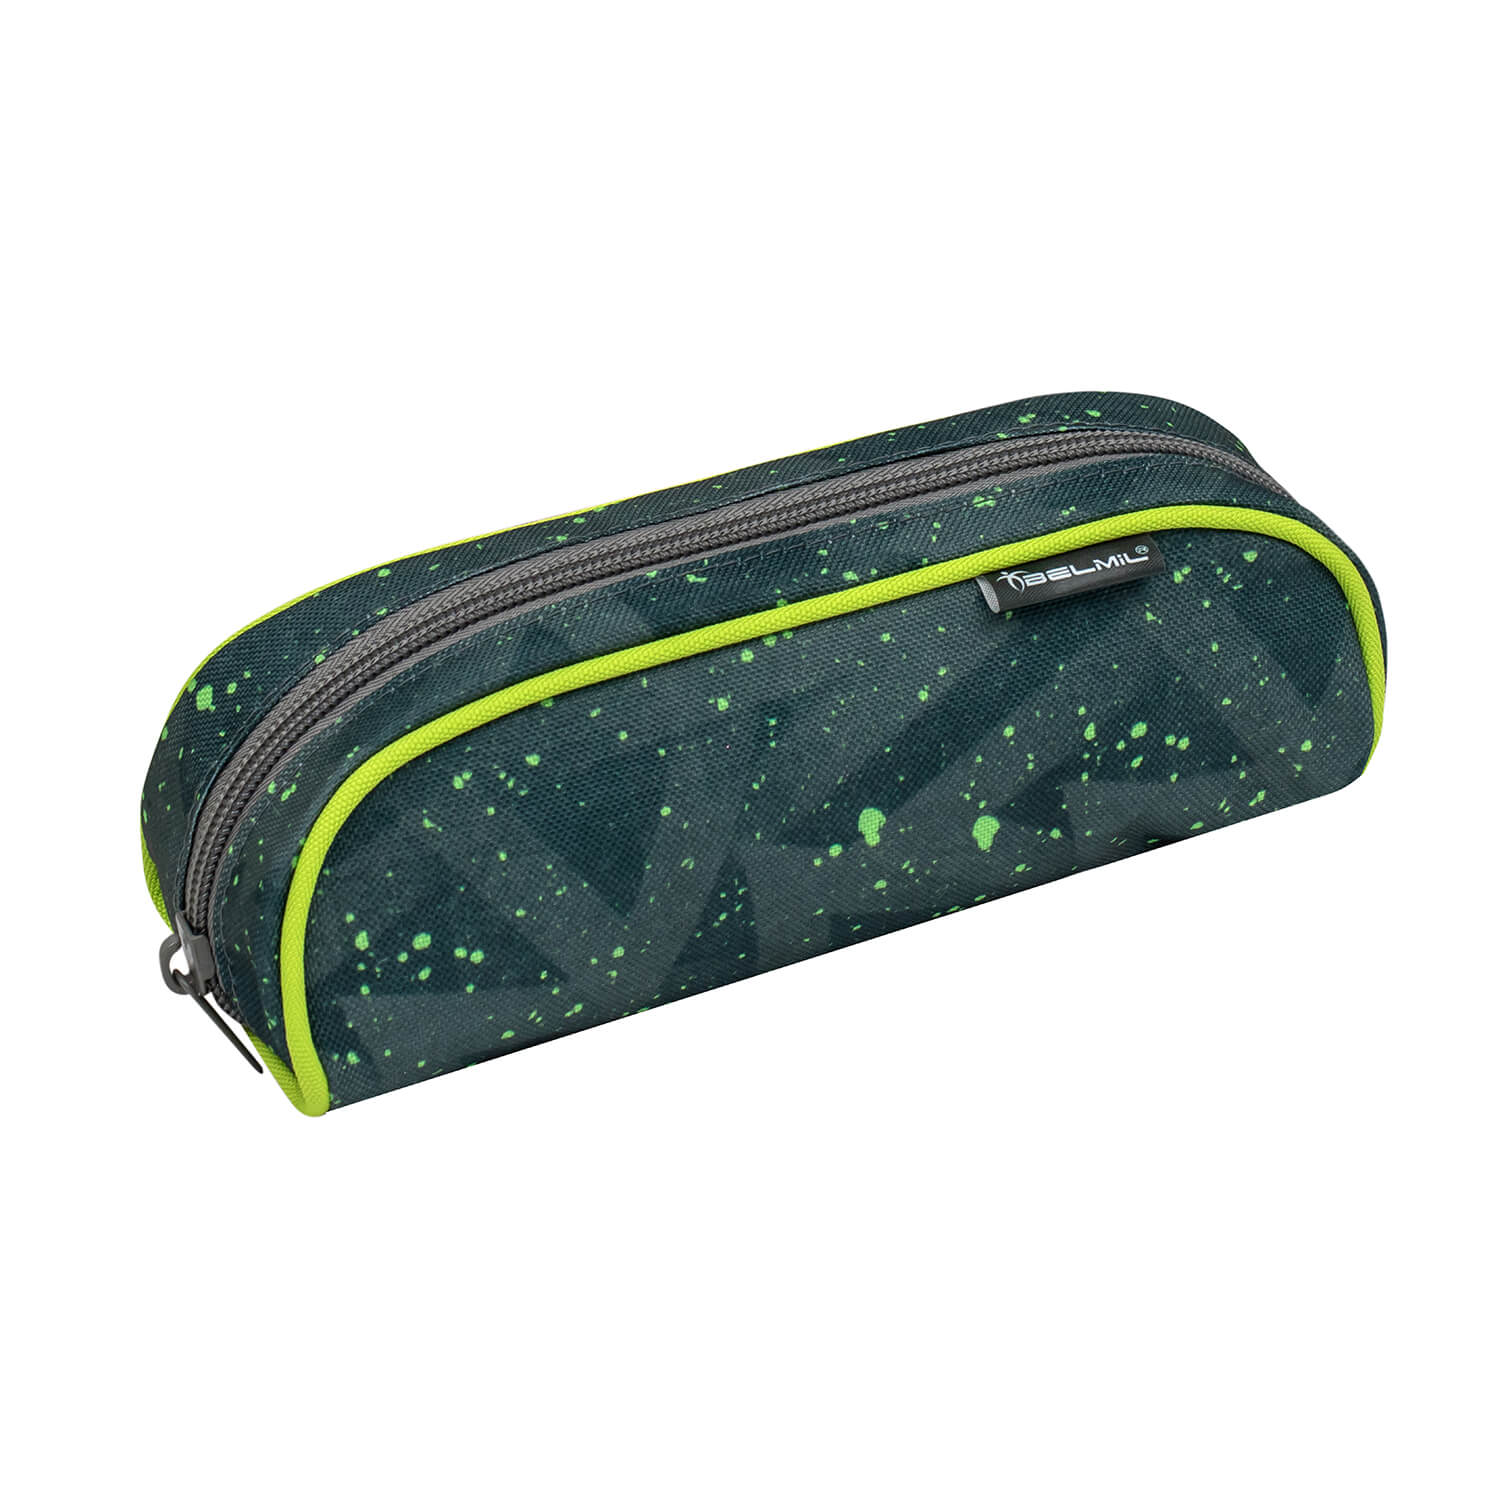 Motion Green Splash schoolbag set 5 pcs